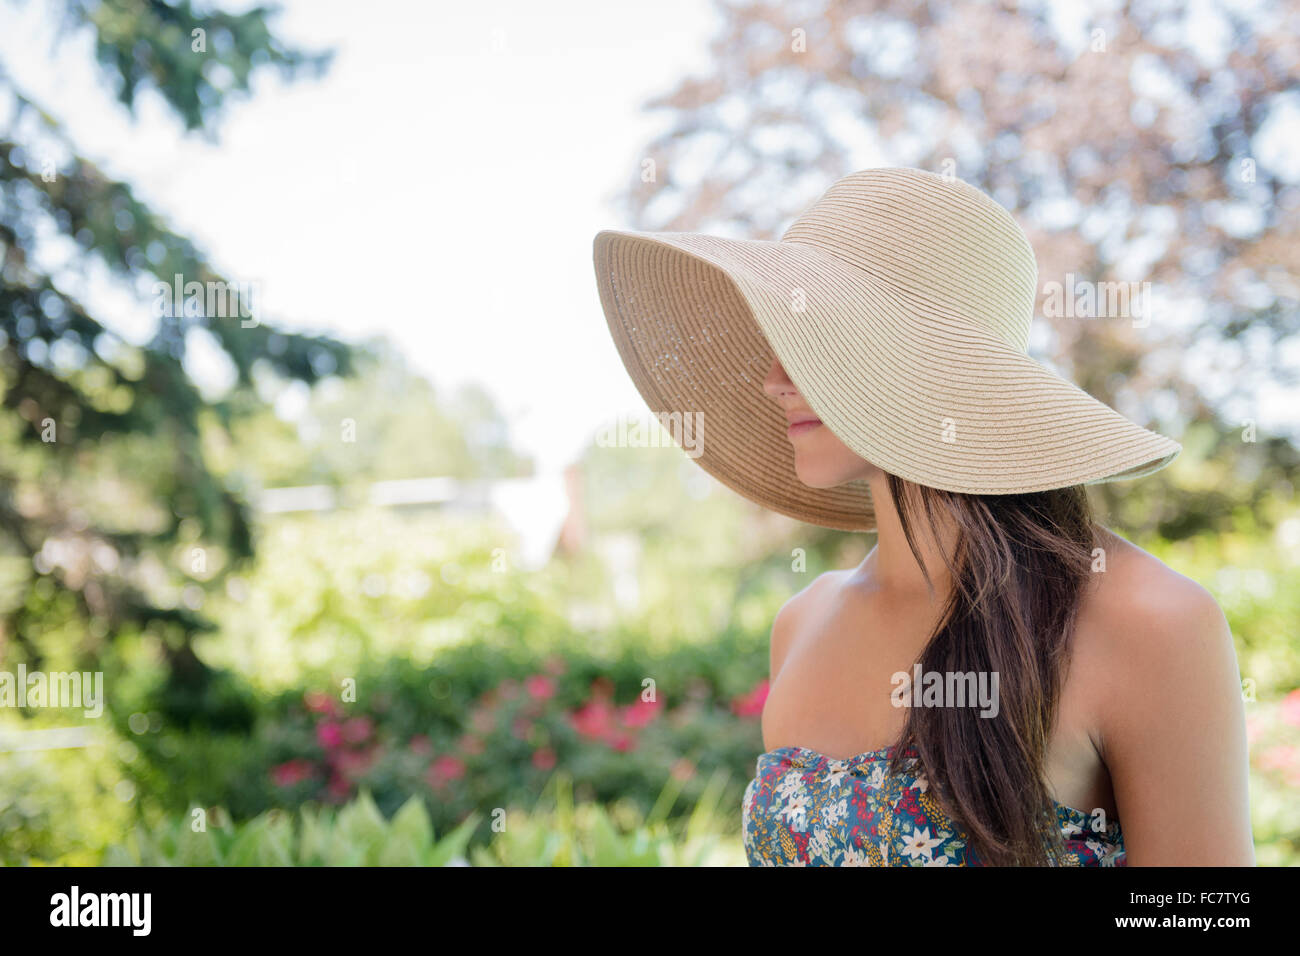 Caucasian woman wearing sun hat outdoors Stock Photo